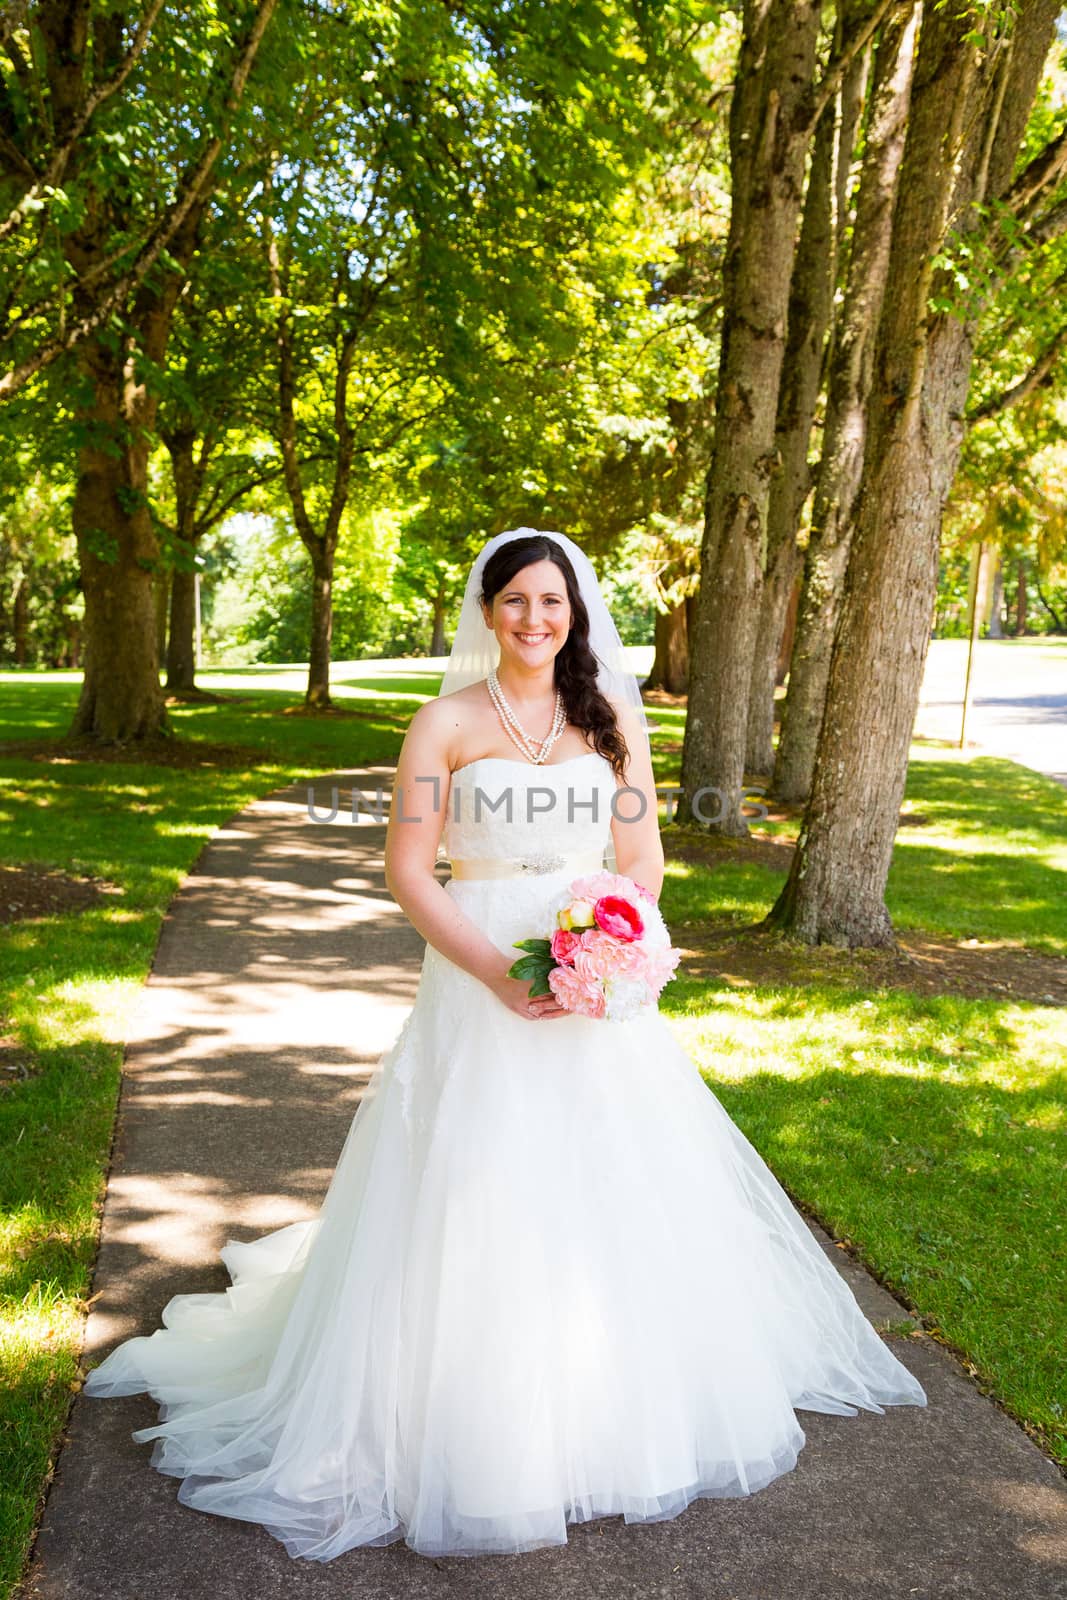 Beautiful Bride Portraits Outdoors by joshuaraineyphotography